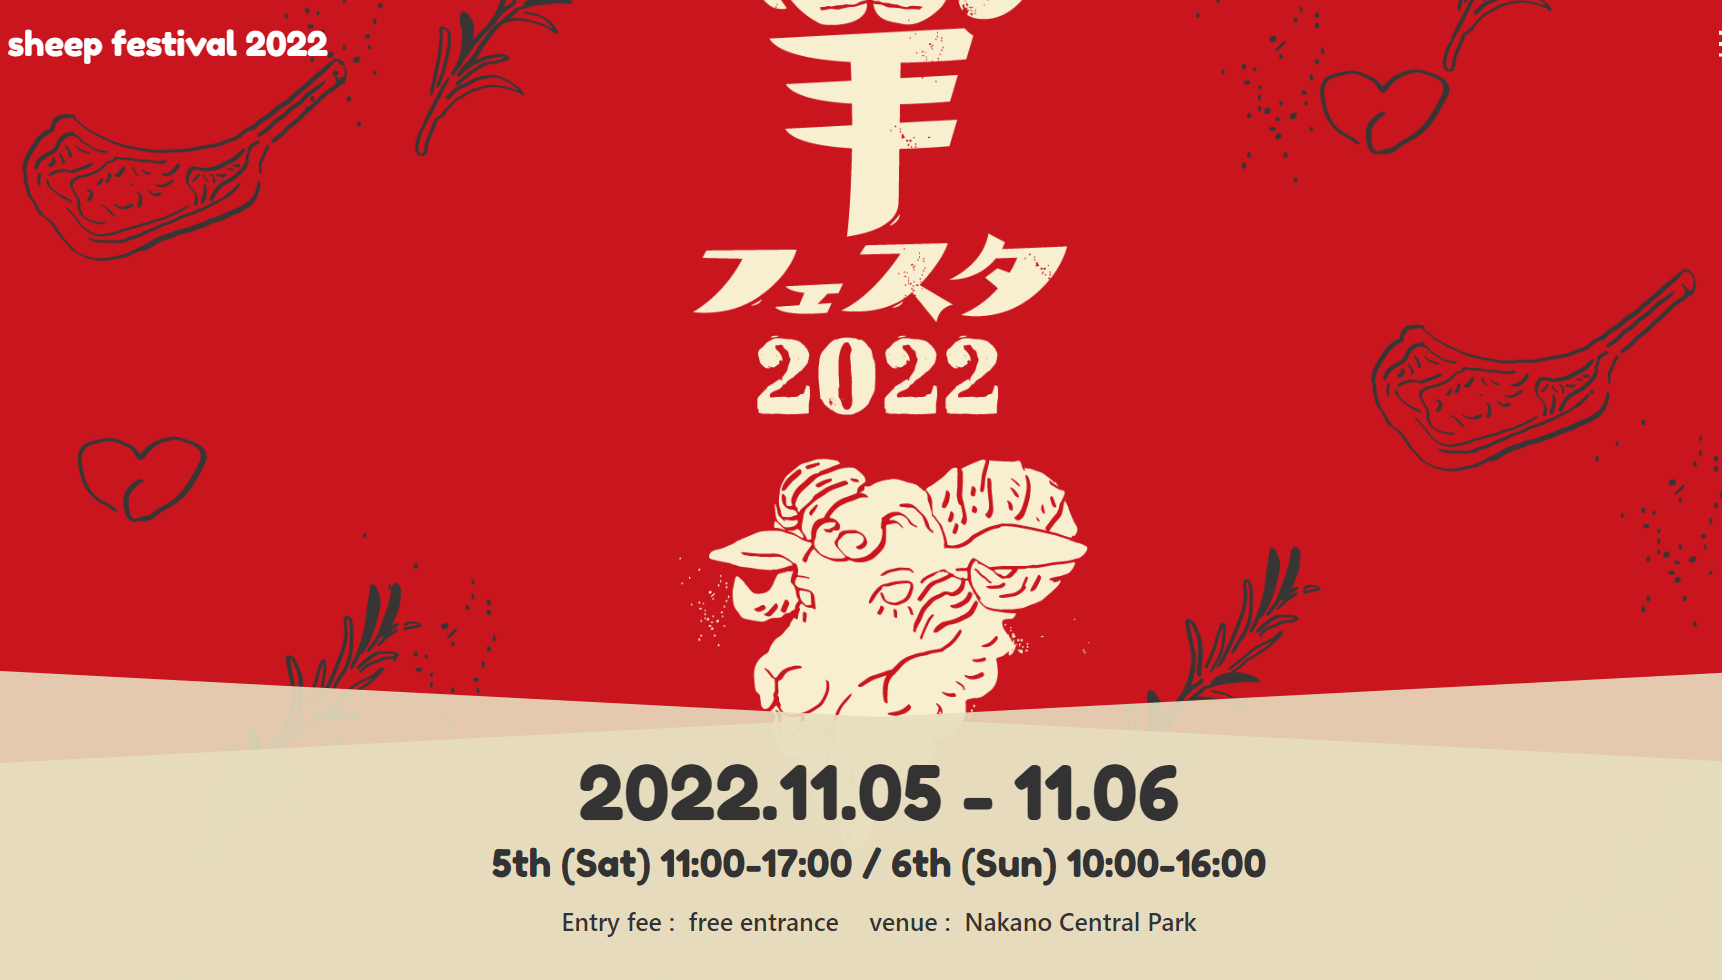 Sheep Festival 2022